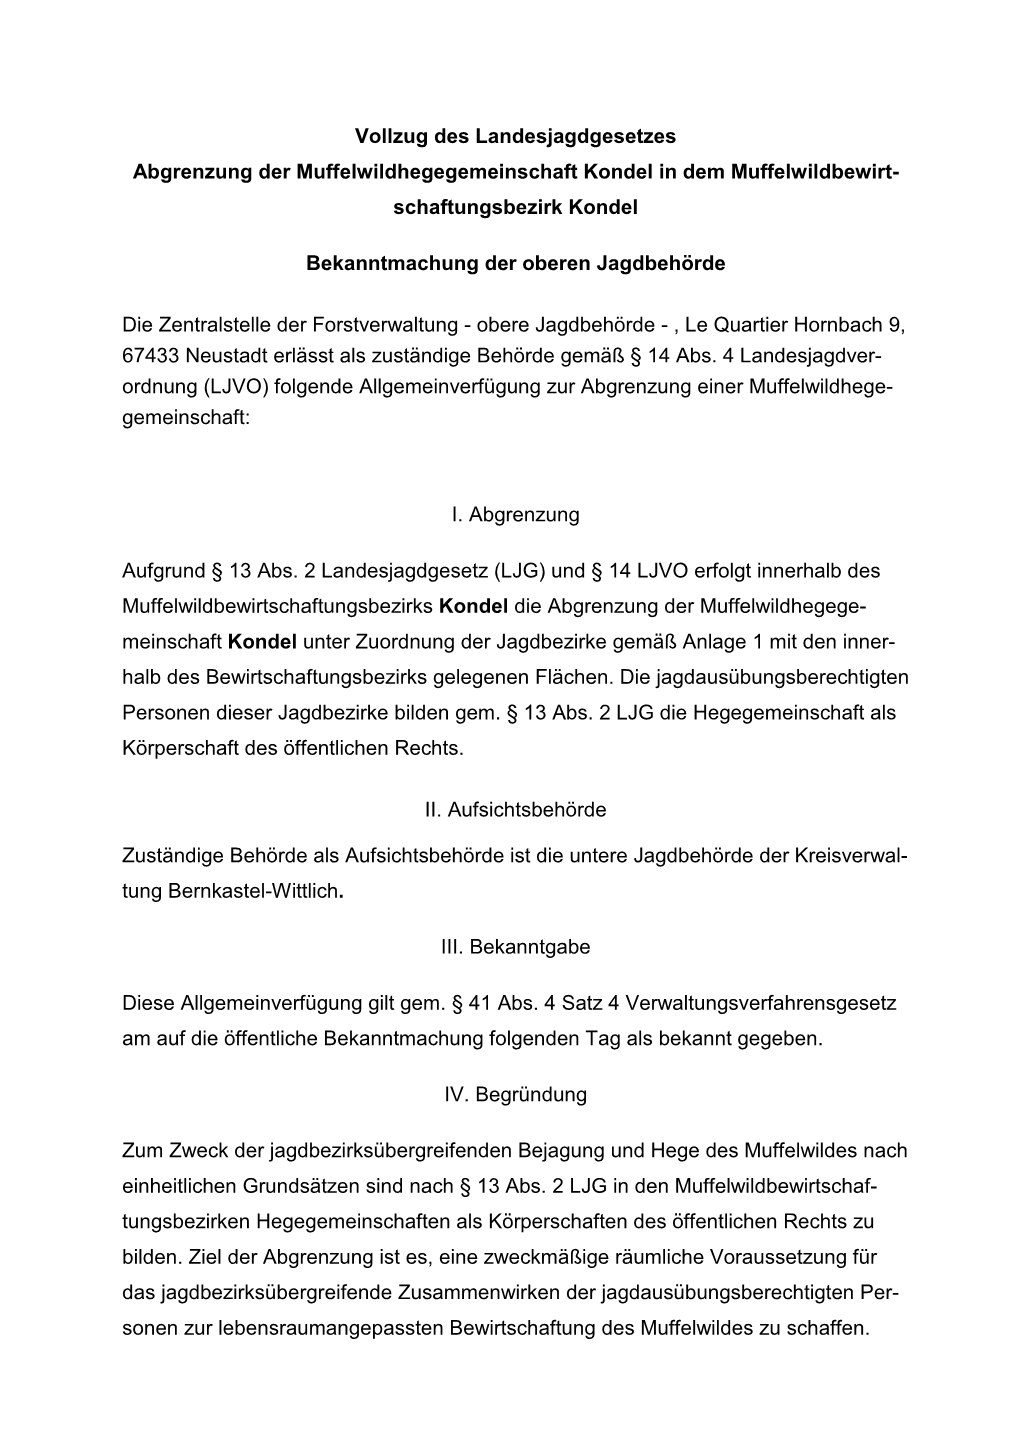 2014-06-16 Abgrenzungsverfügung MHG Kondel